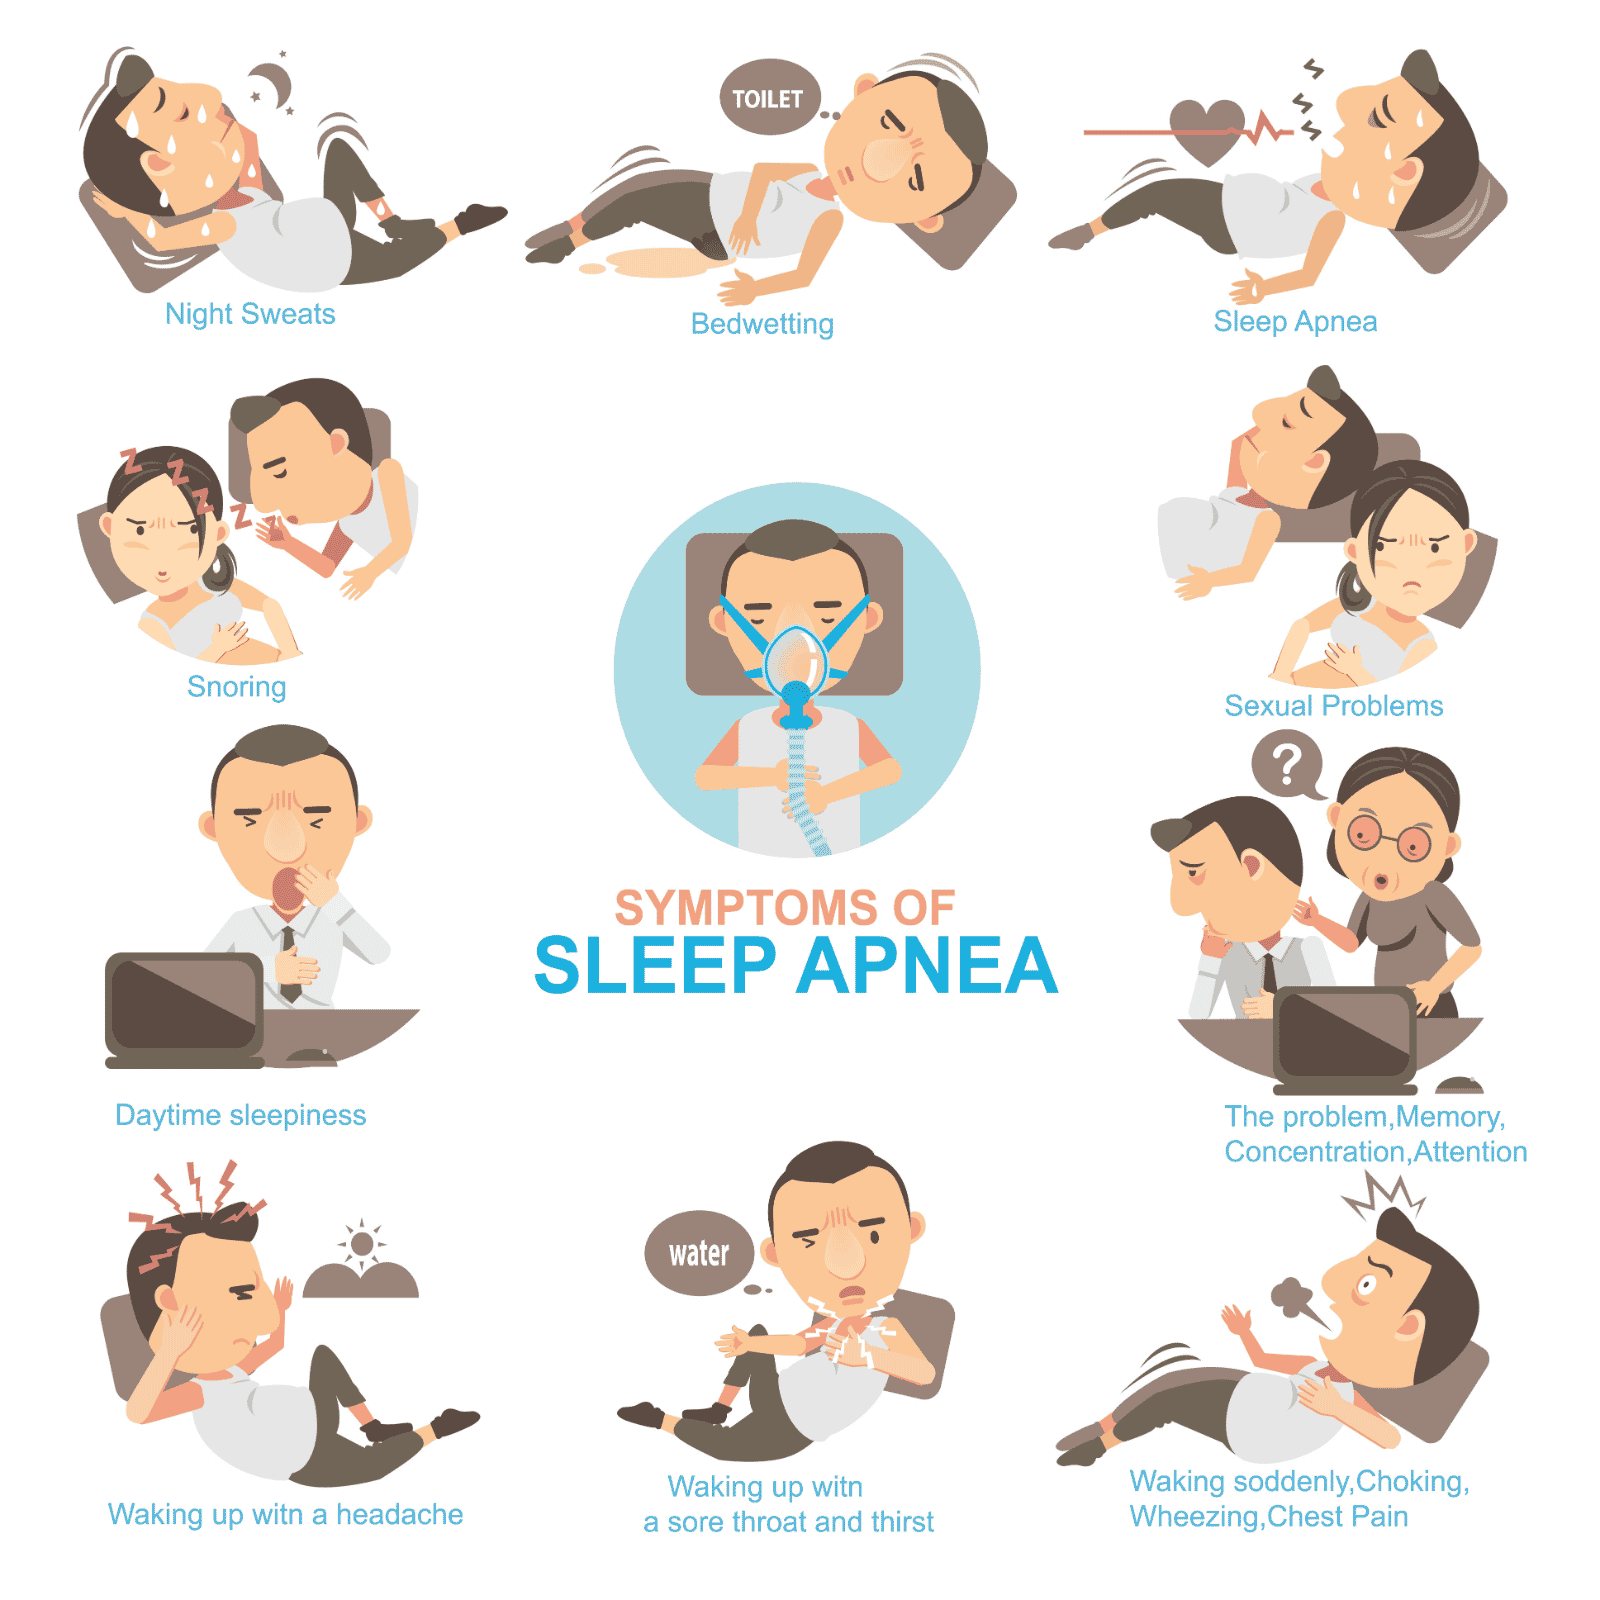 Can Anxiety Cause Sleep Apnea?